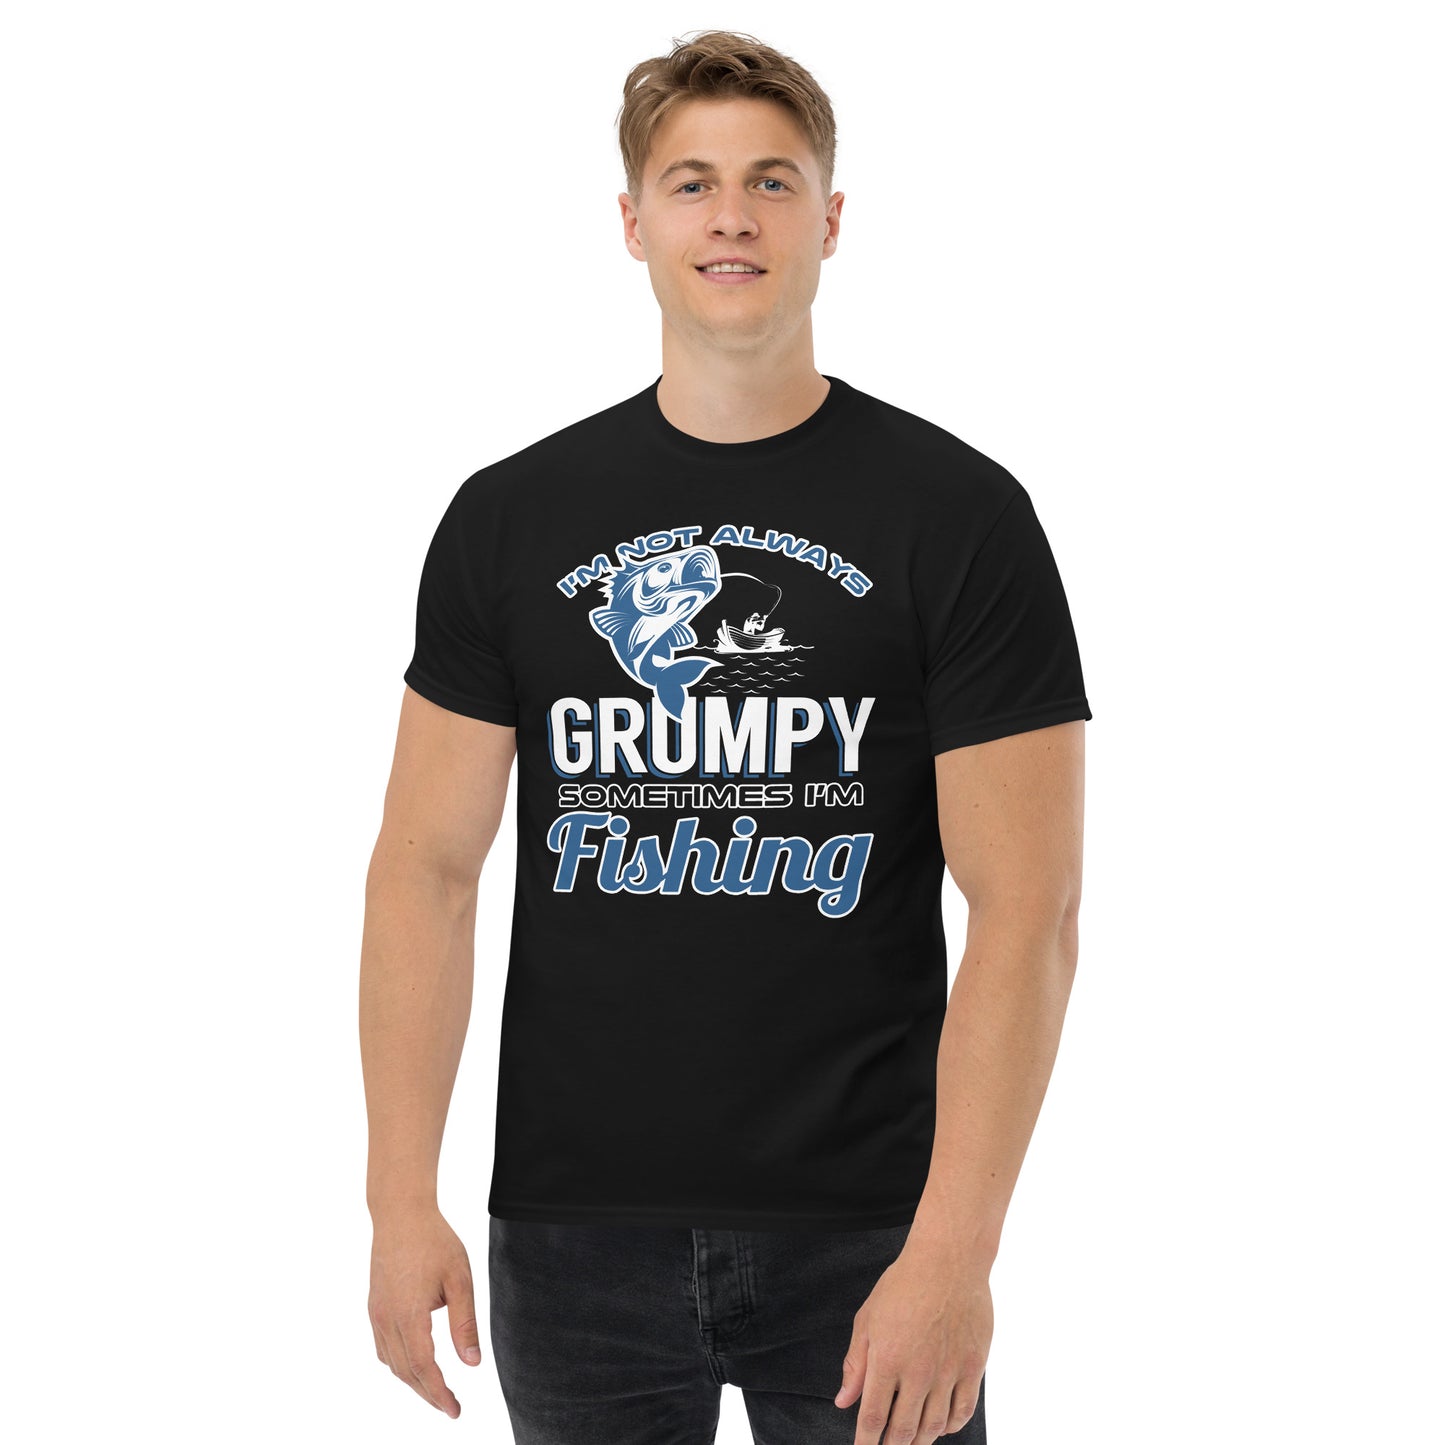 I'm Not Always Grumpy T-Shirt